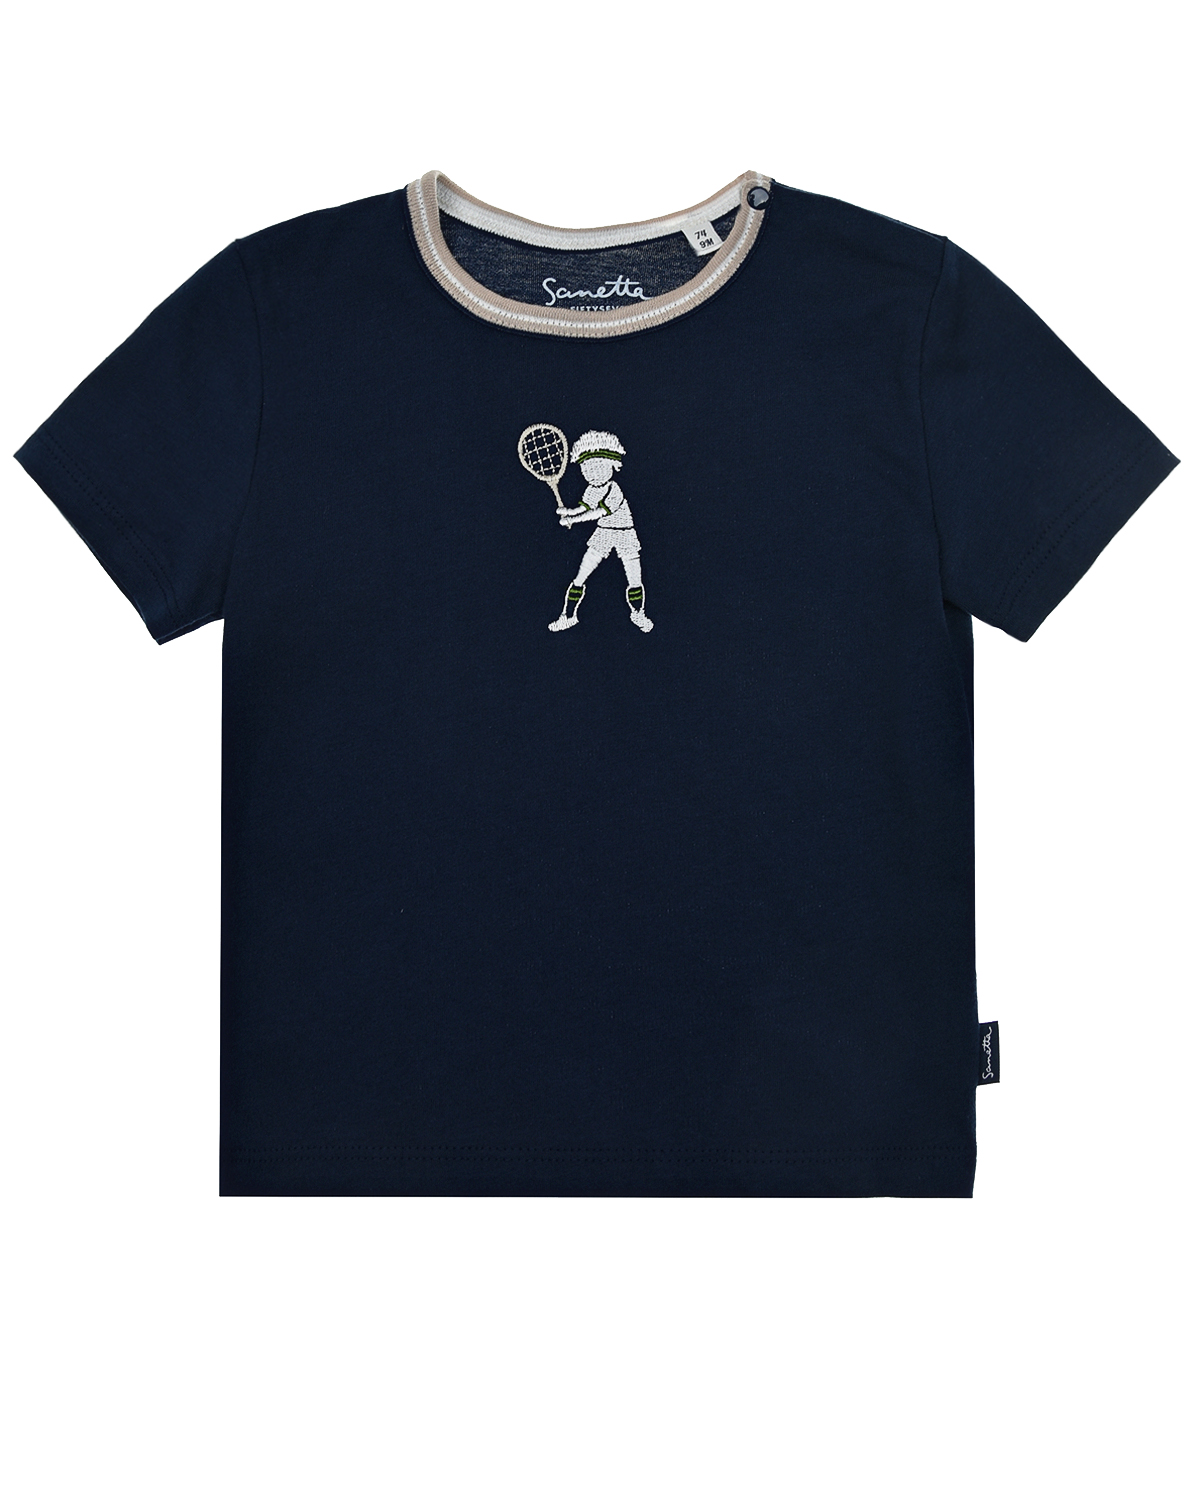 Синяя футболка с вышивкой "теннисист" Sanetta fiftyseven детская, размер 68, цвет синий - фото 1